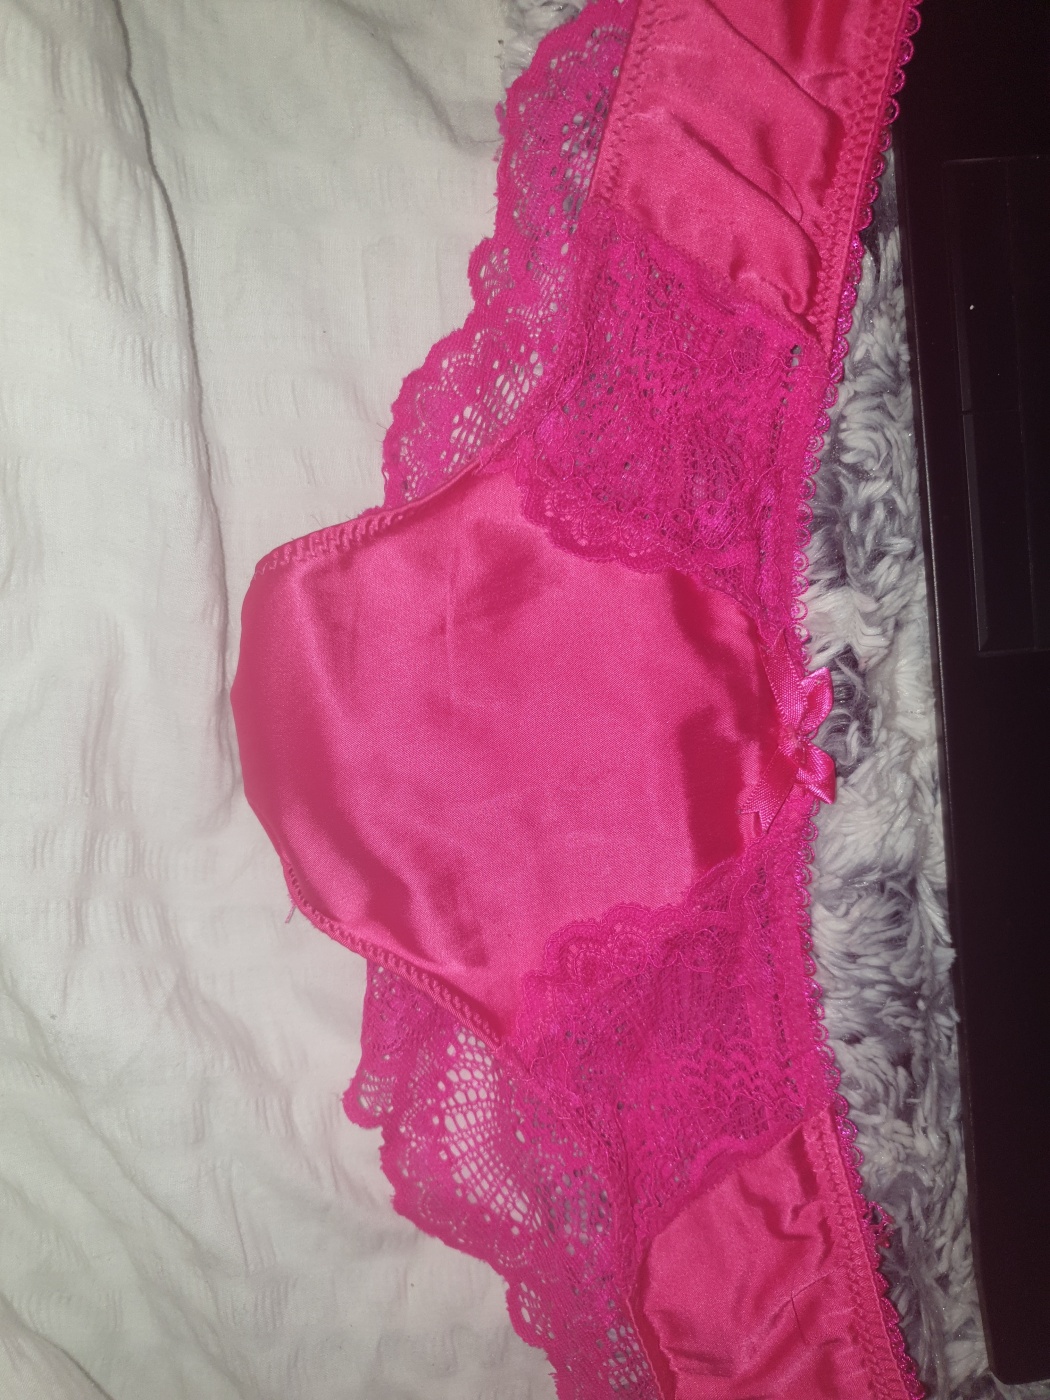 Silky pink panties